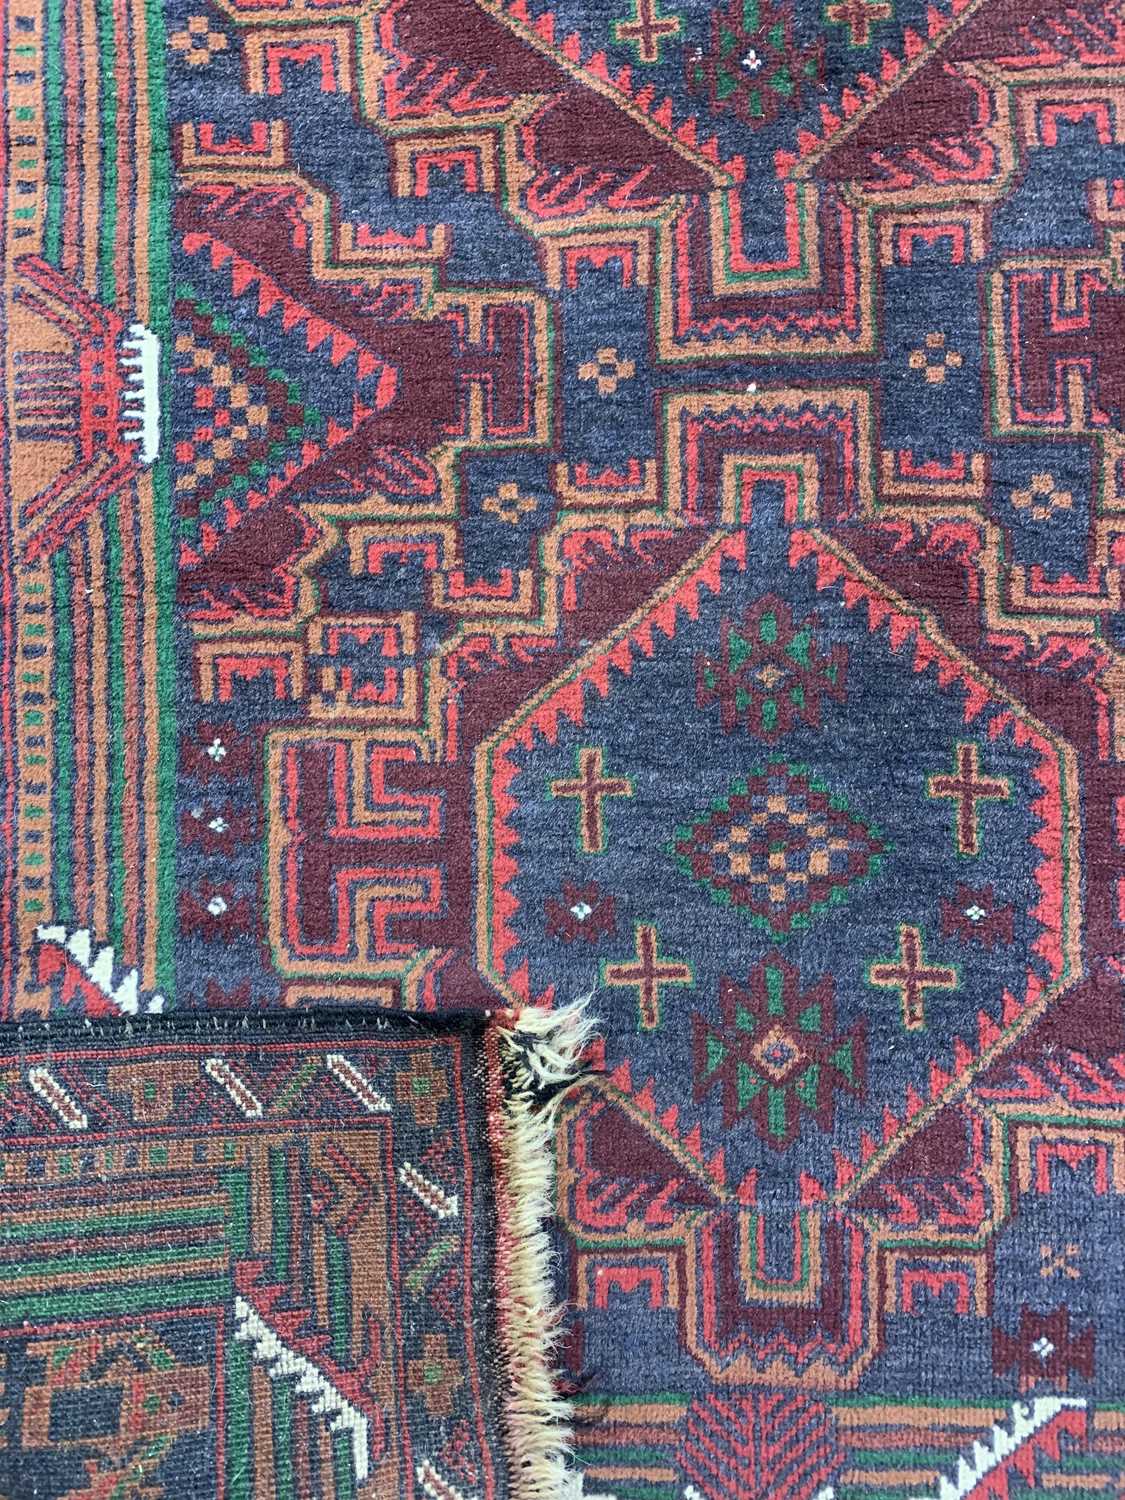 PERSIAN RED/BLUE GROUND HANDMADE WOOL RUG, triple medallion centre, geometric border, 192 x 113cms - Image 3 of 3